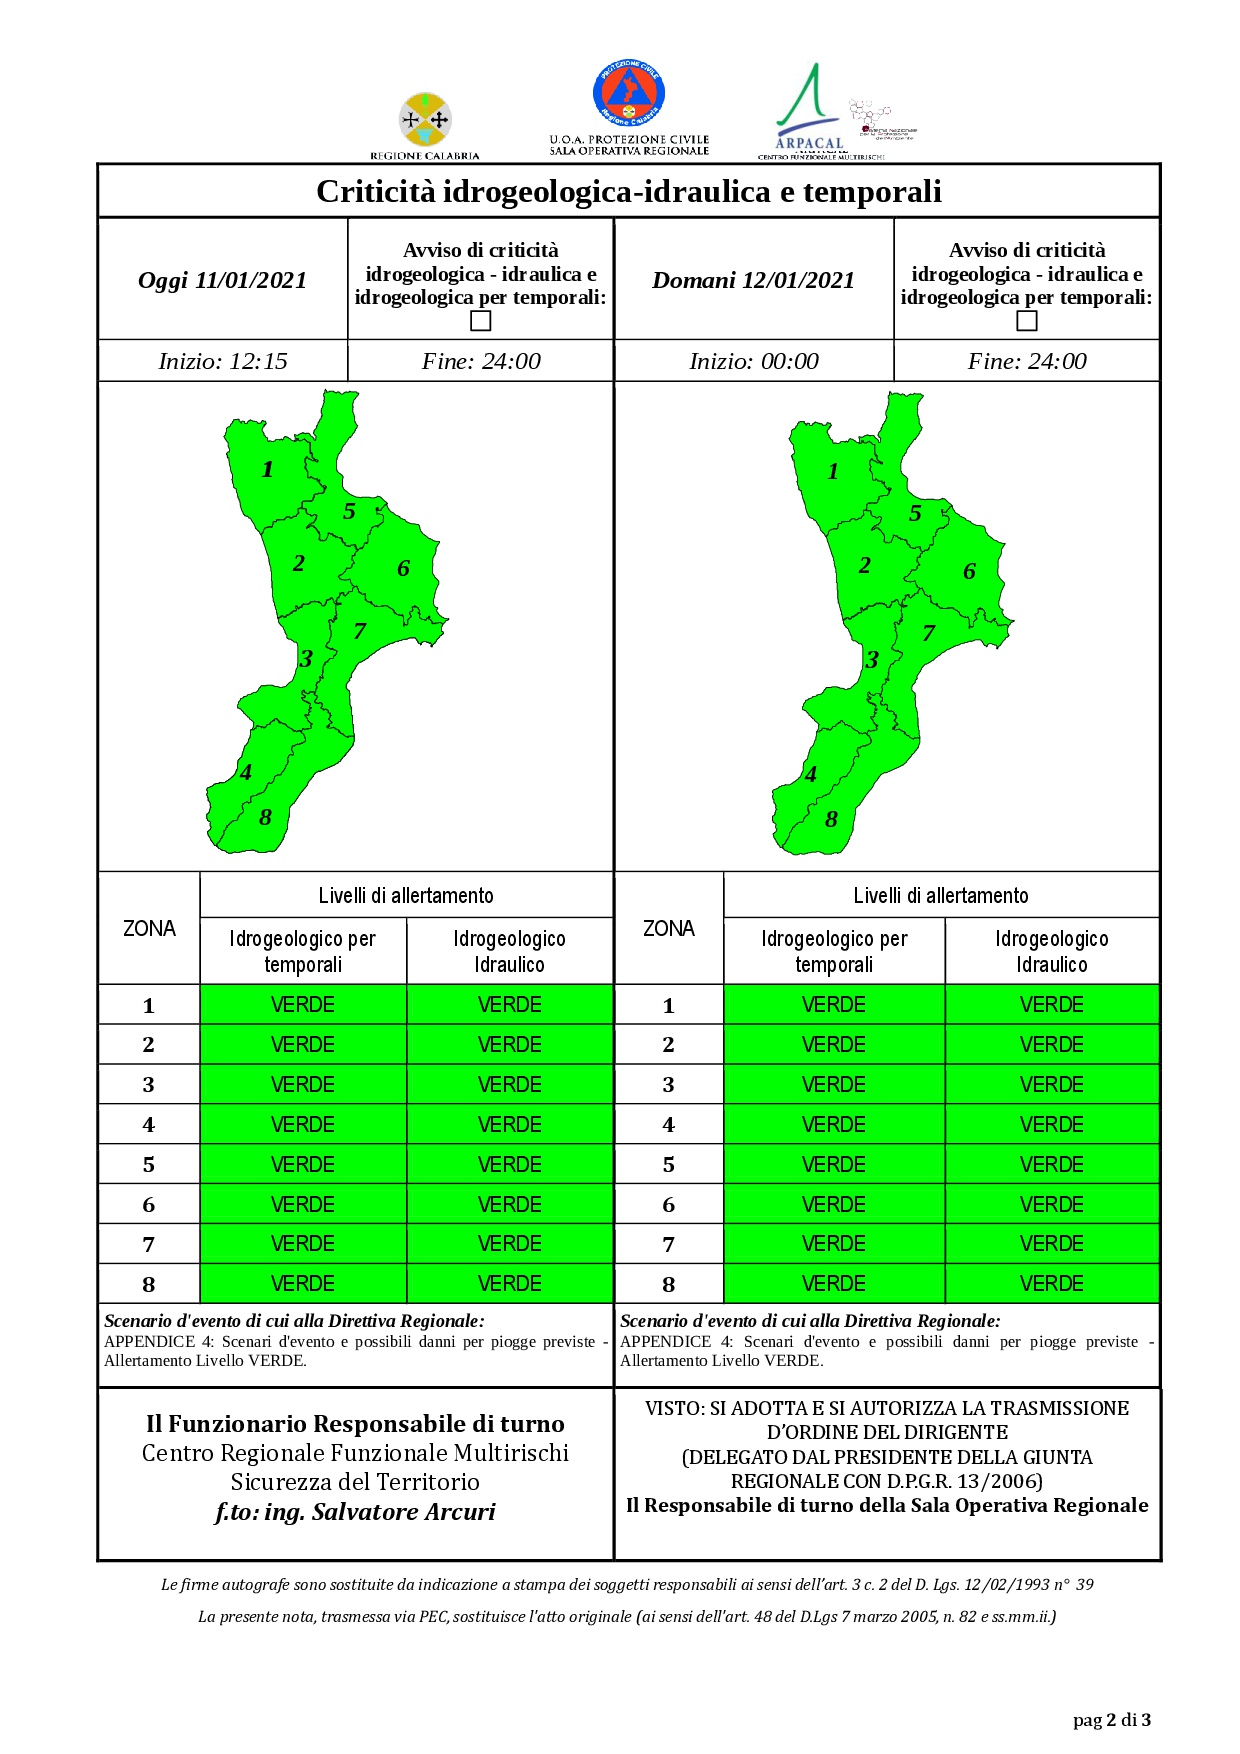 Criticità idrogeologica-idraulica e temporali in Calabria 11-01-2021